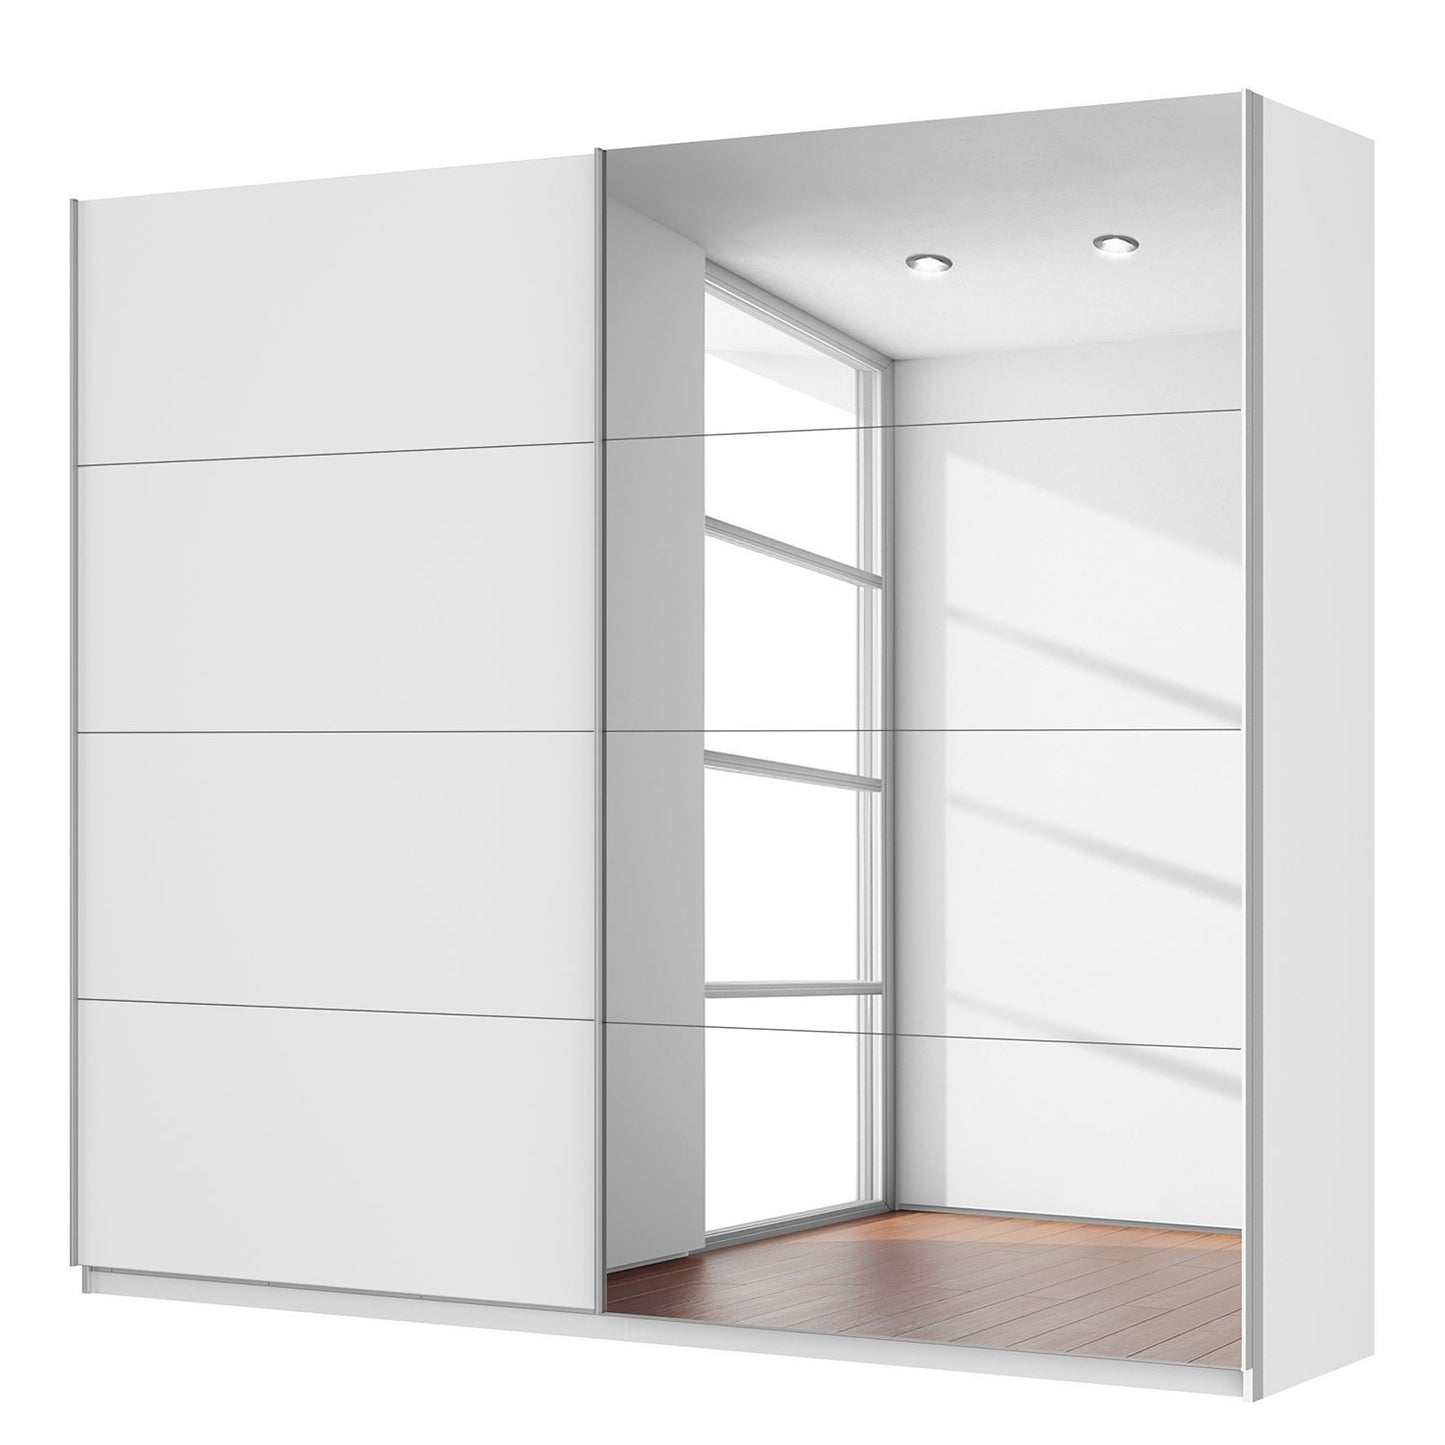 Rauch Quadra Sliding Door Wardrobe White with Mirror 271cm